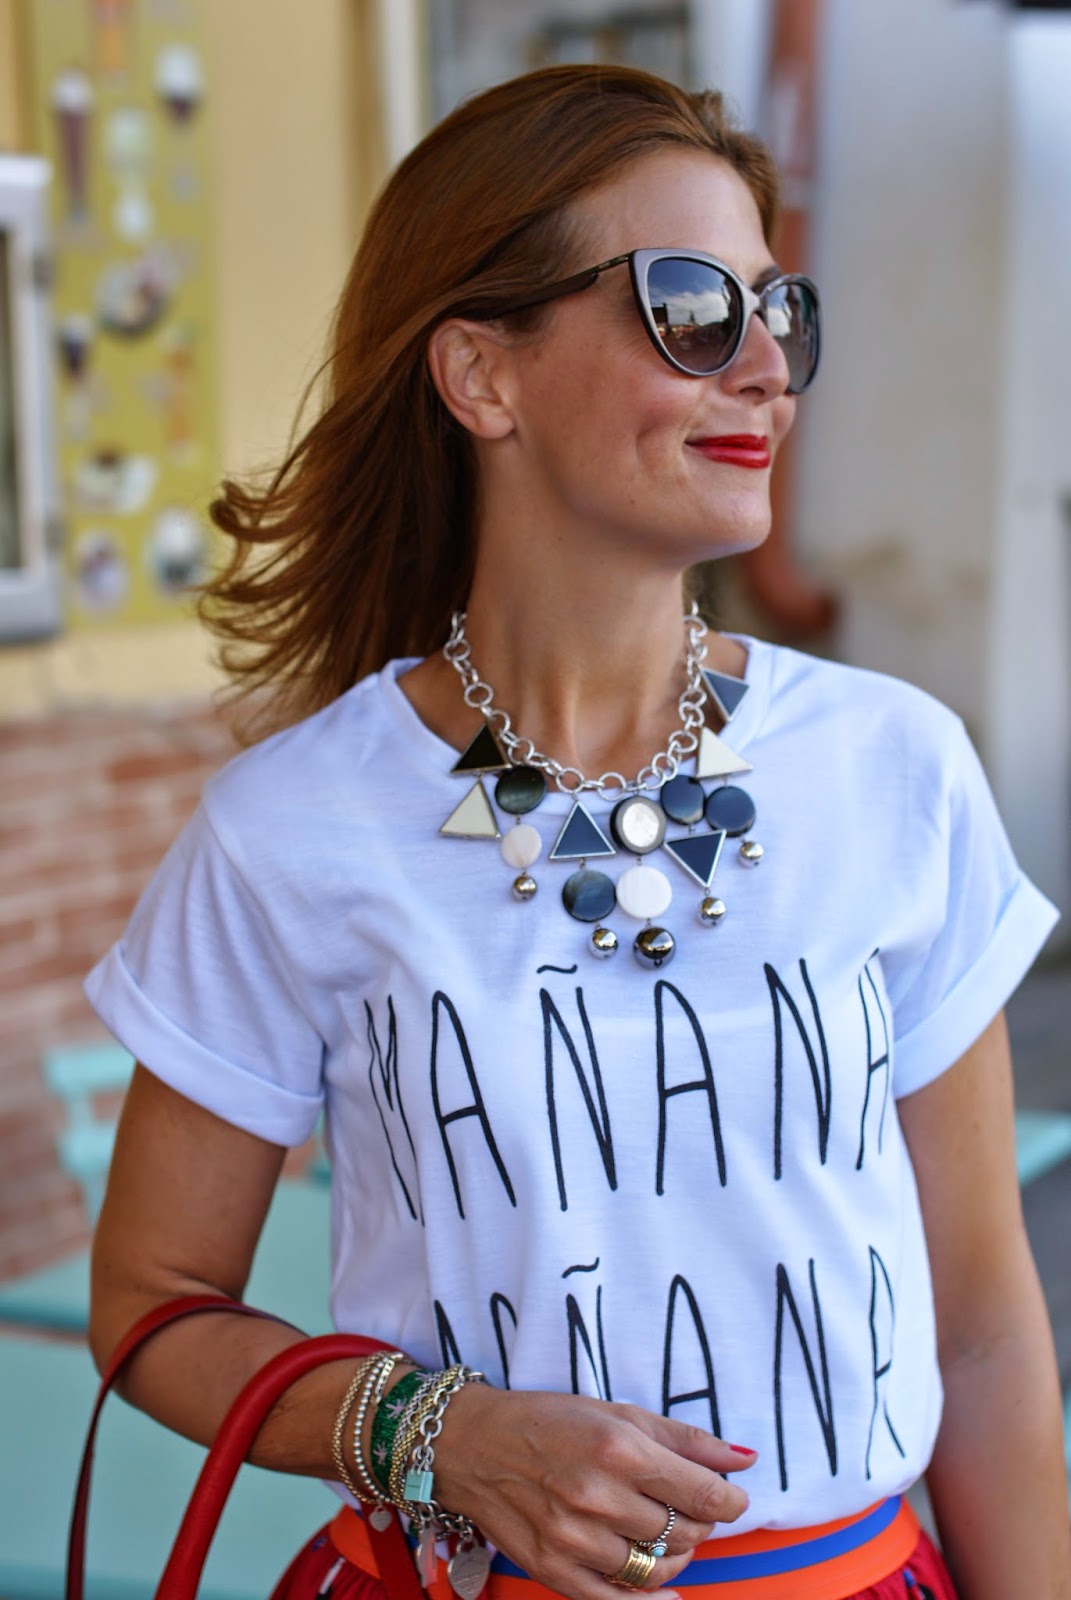 Vitti Ferria Contin necklace, manana t-shirt, Moschino sunglasses, Fashion and Cookies, fashion blogger